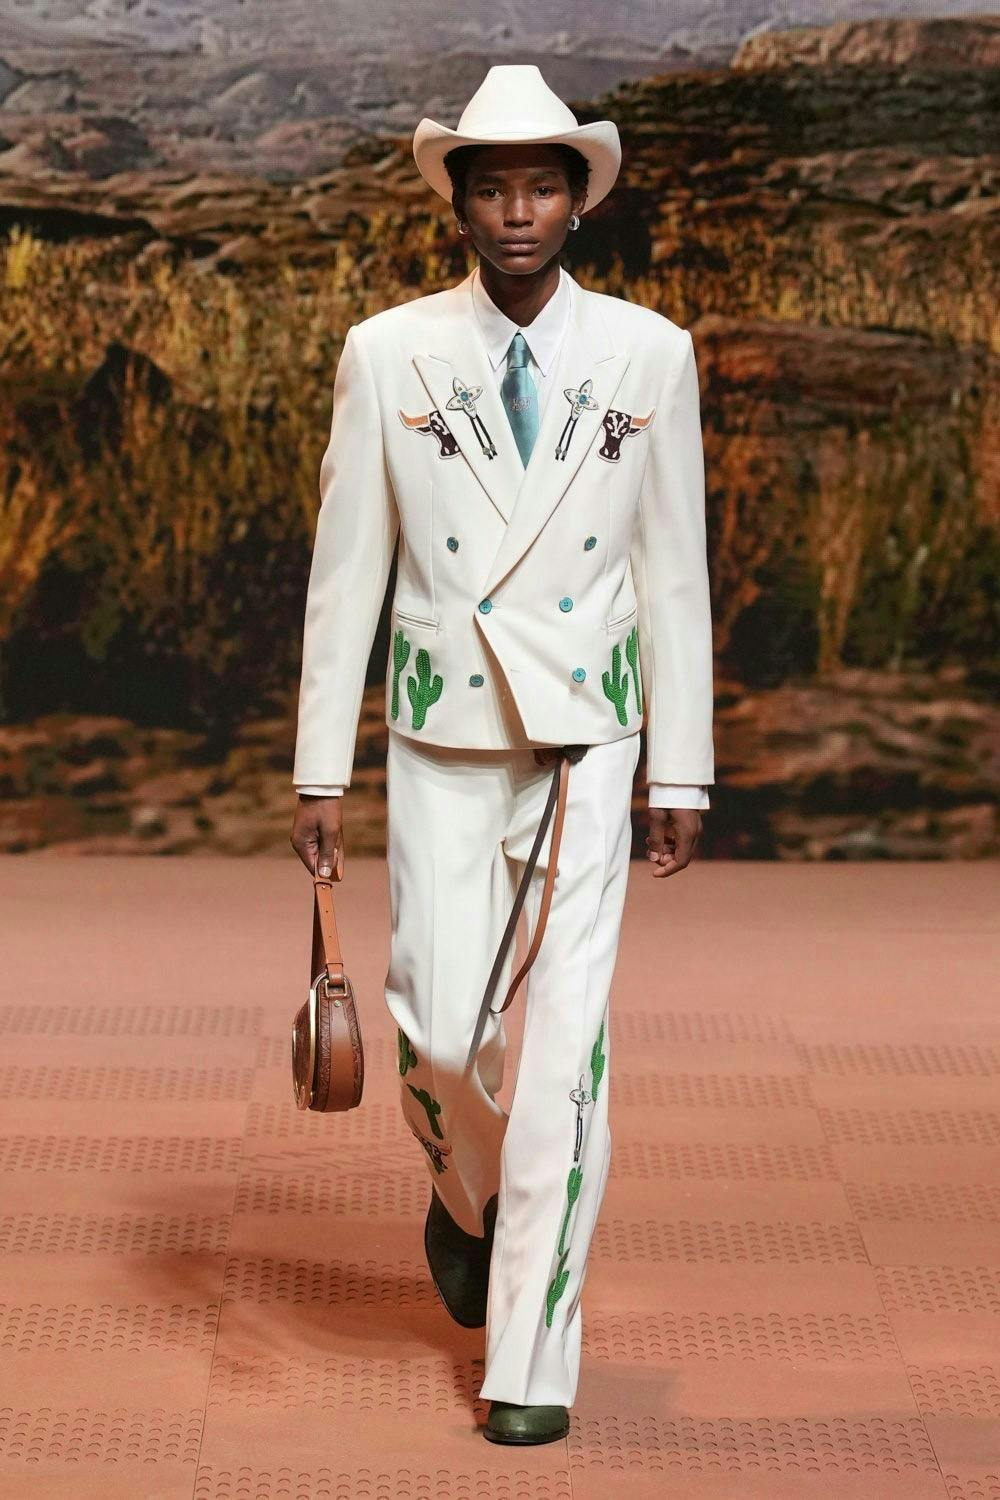 formal wear suit person standing adult male man coat tie handbag